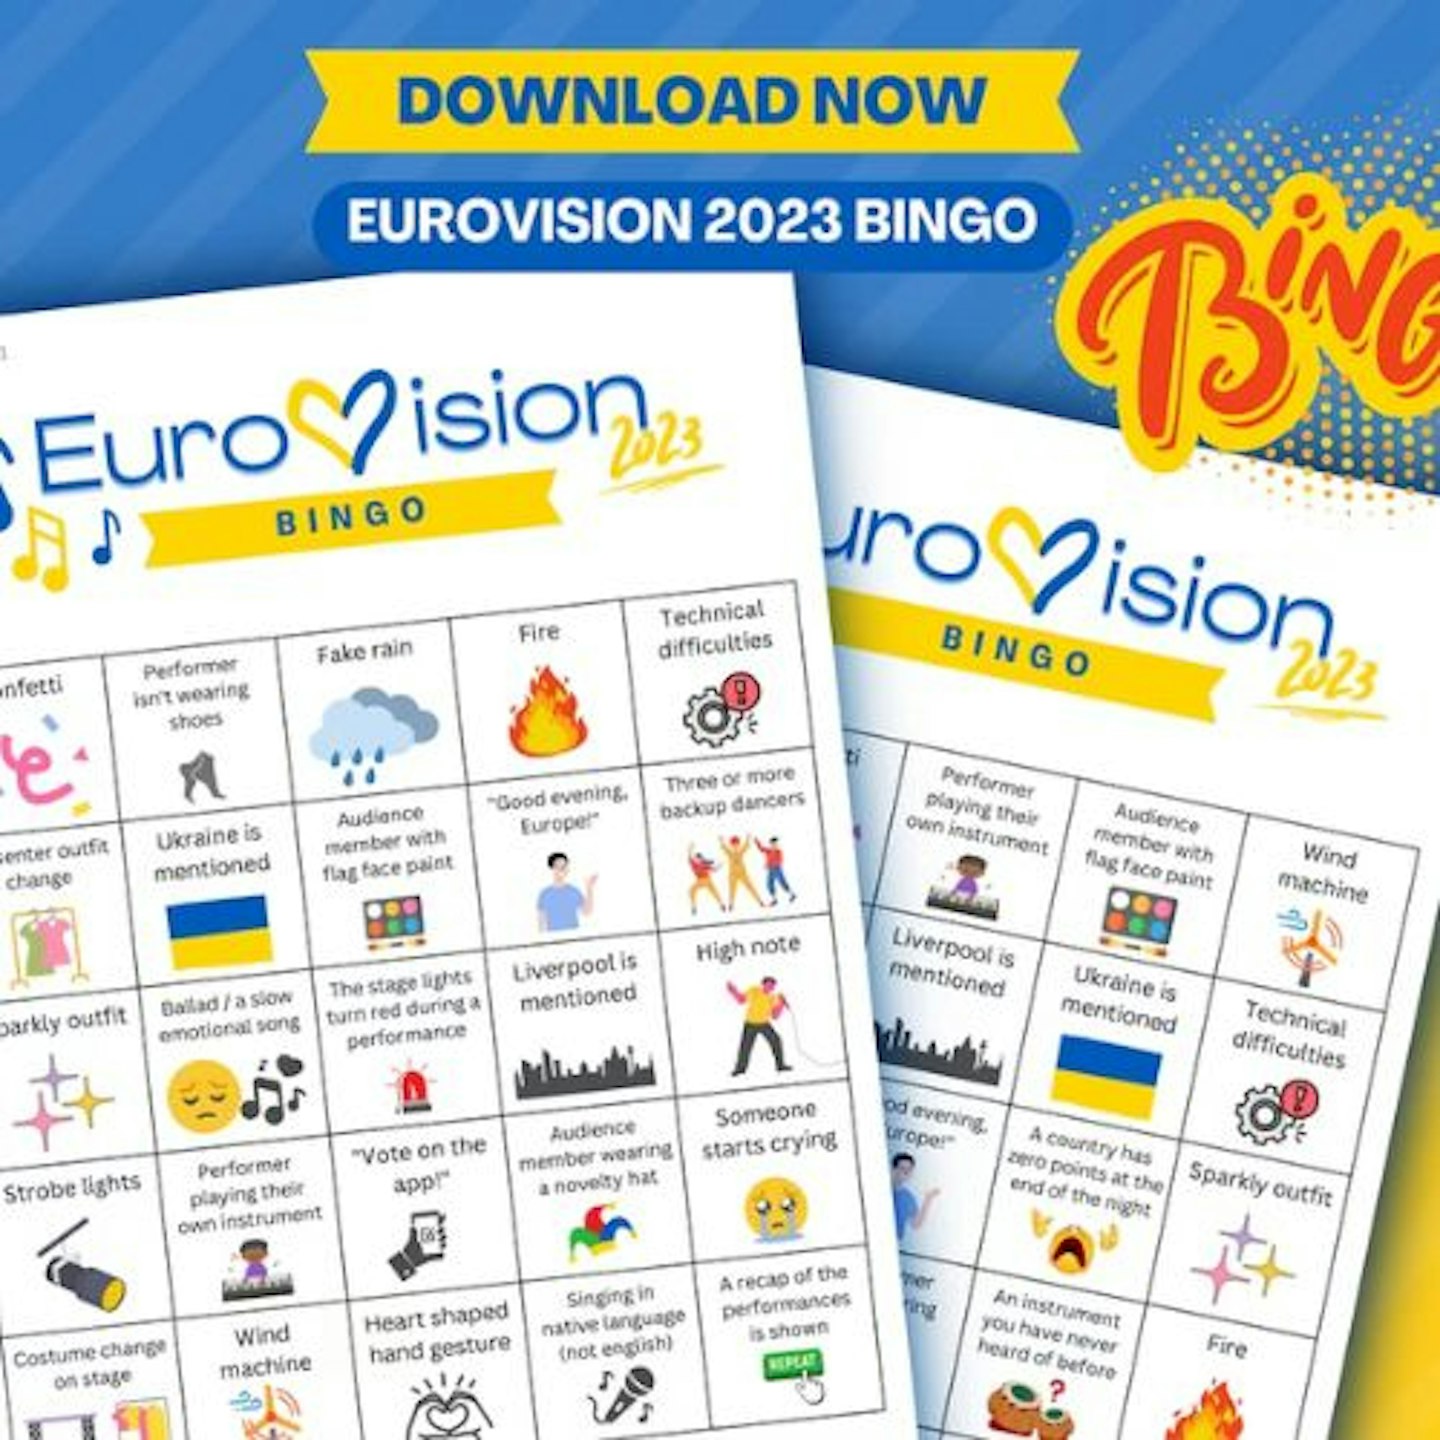 Eurovision 2023 Bingo Sheets (12 Player Cards)